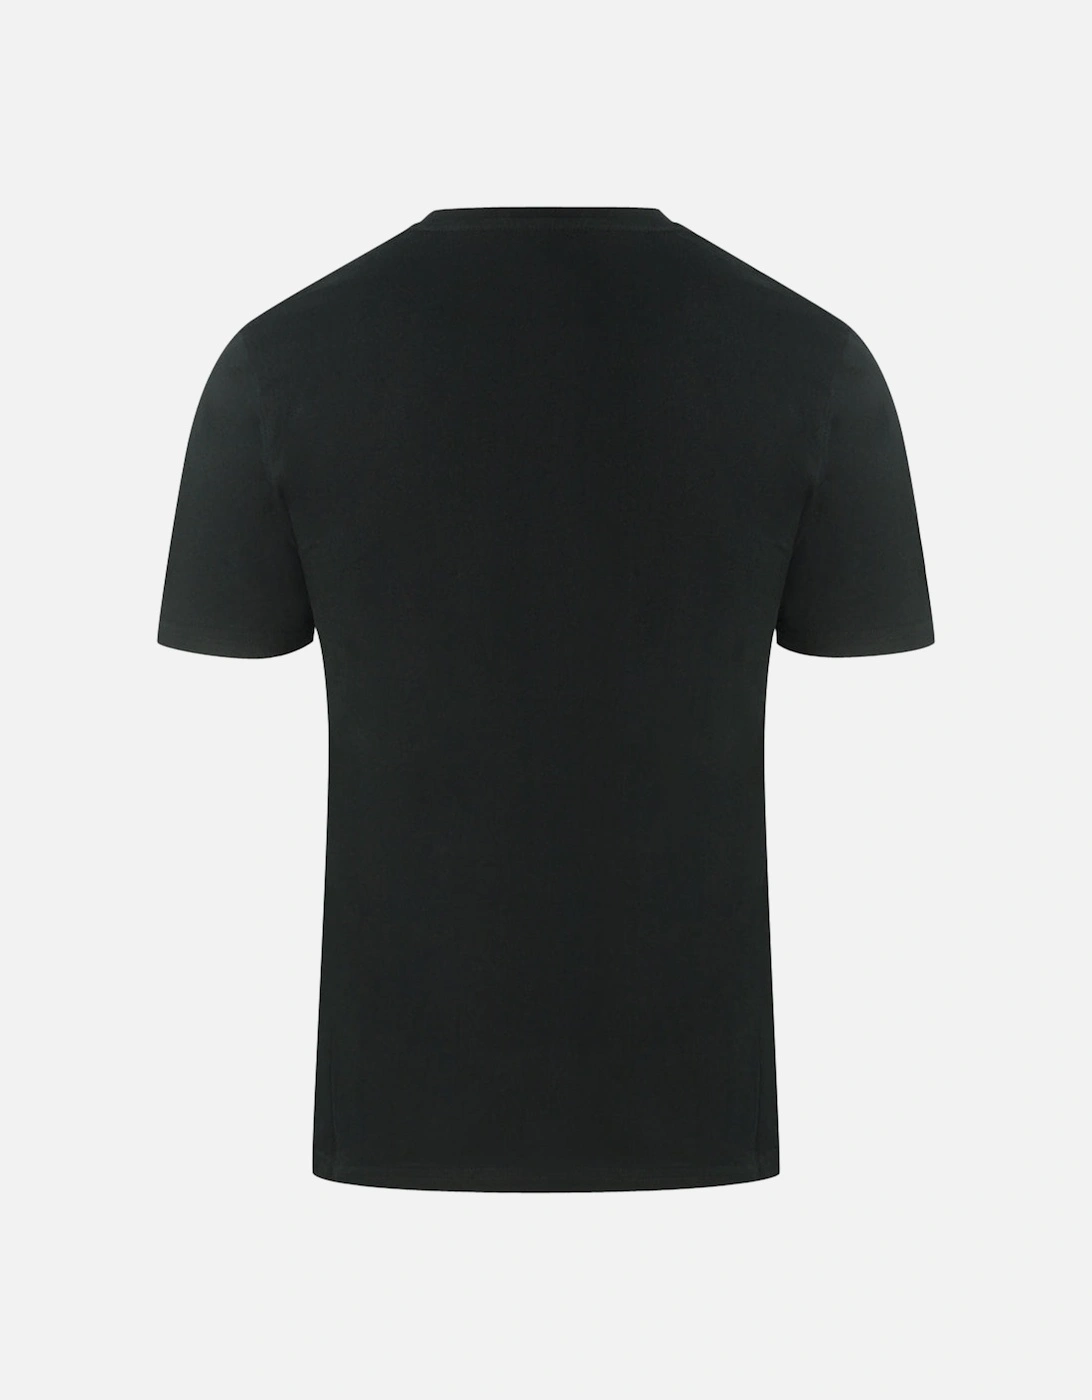 USA Black T-Shirt